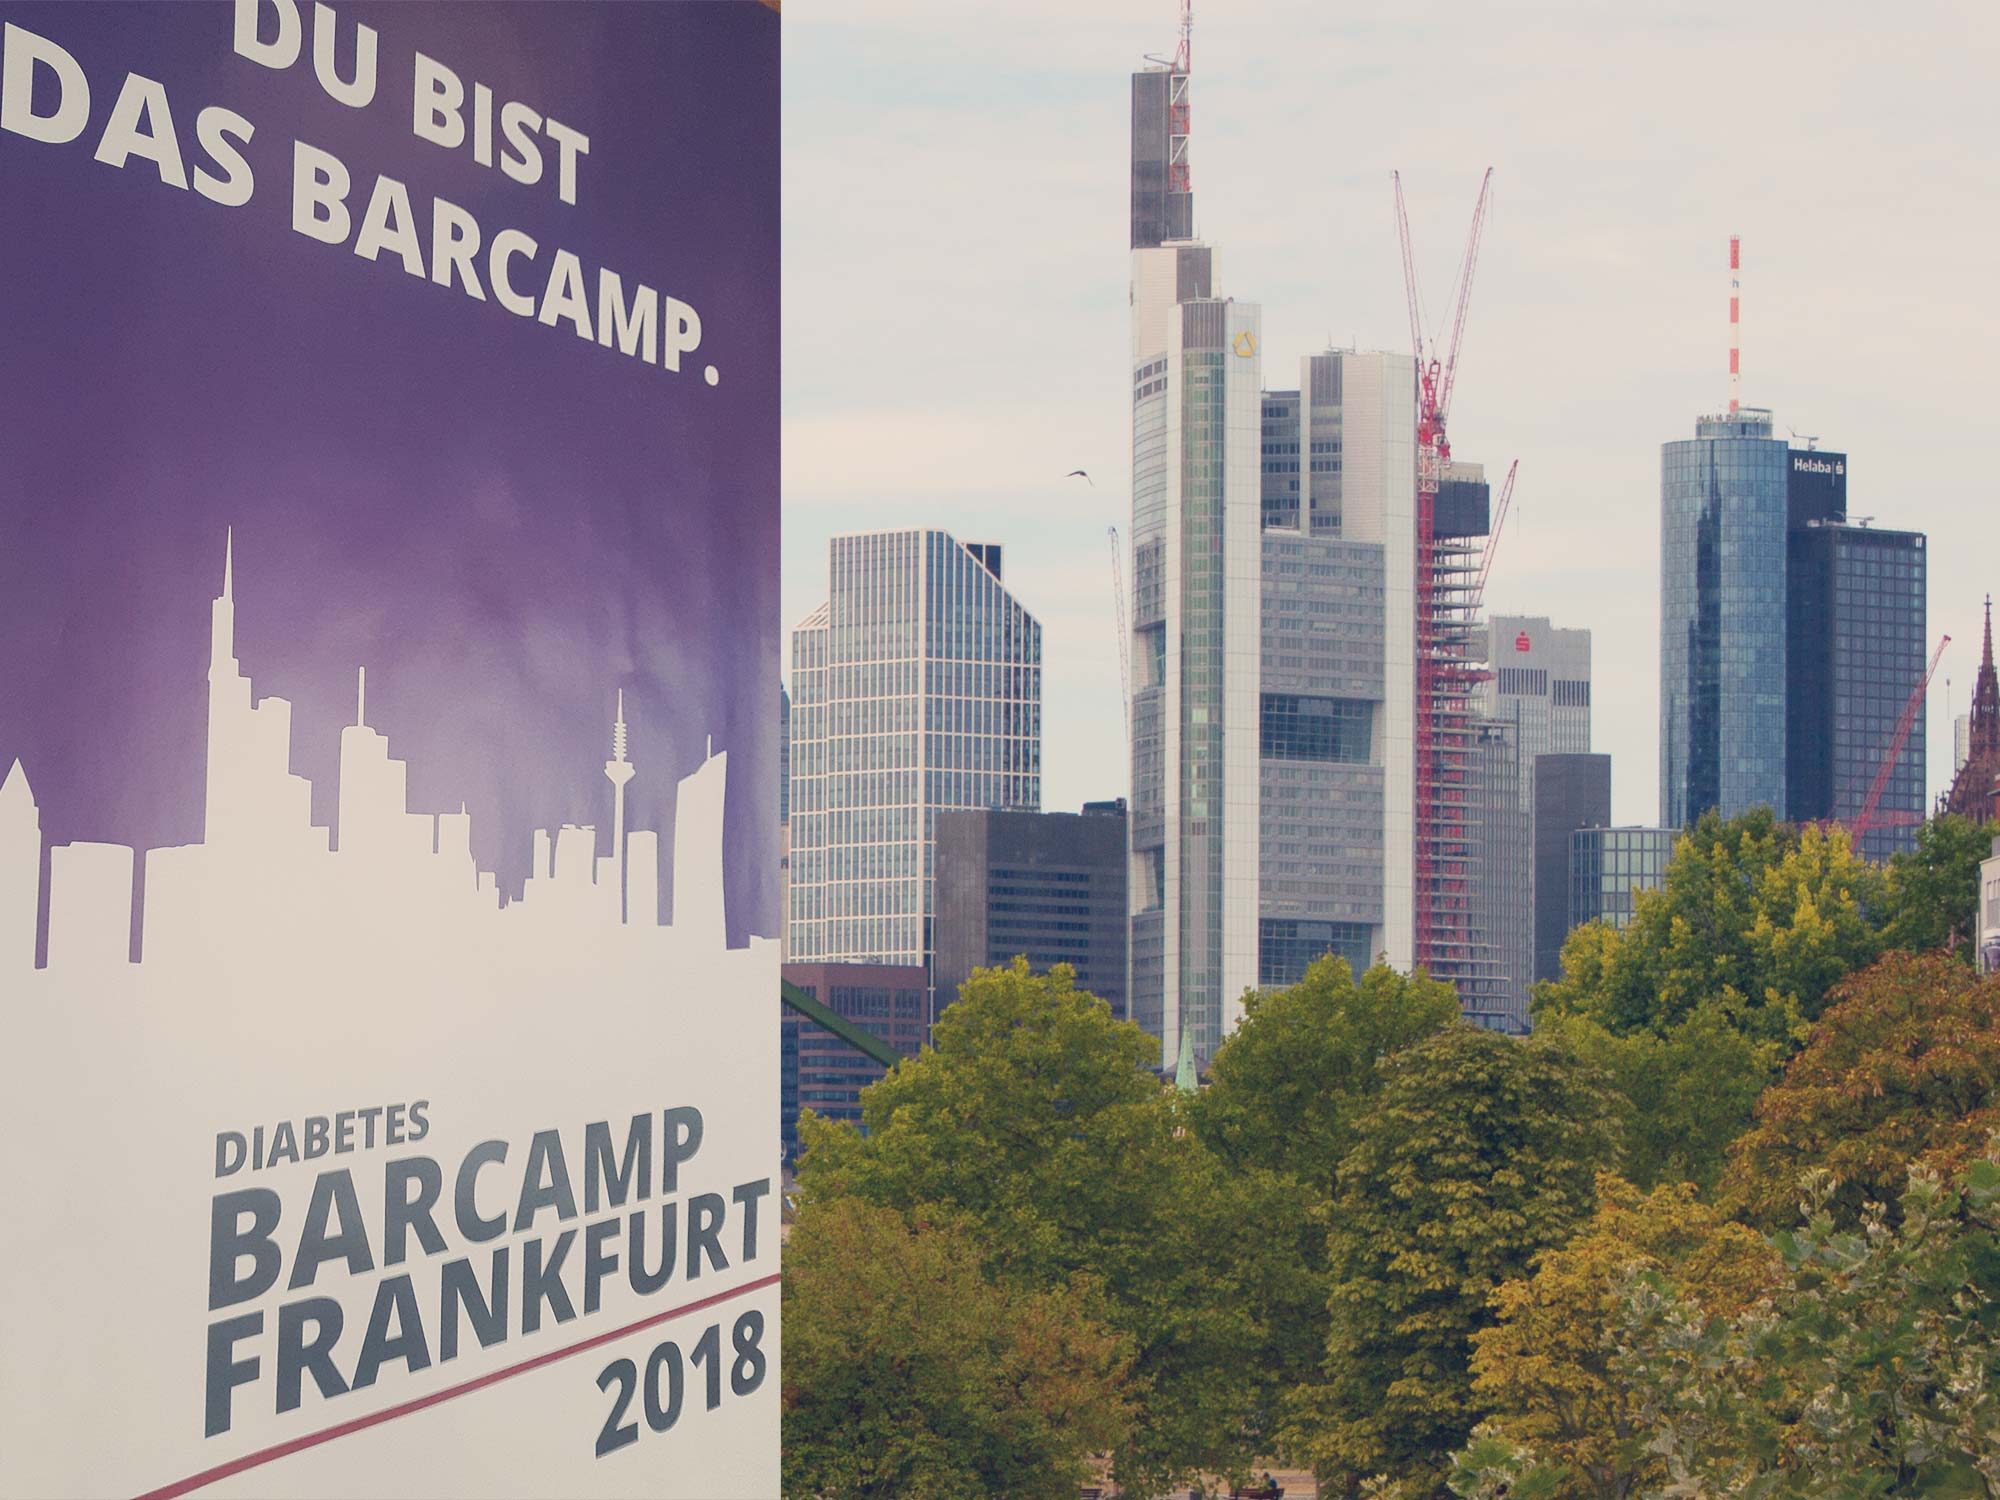 Diabetes Barcamp 2018 Frankfurter Skyline